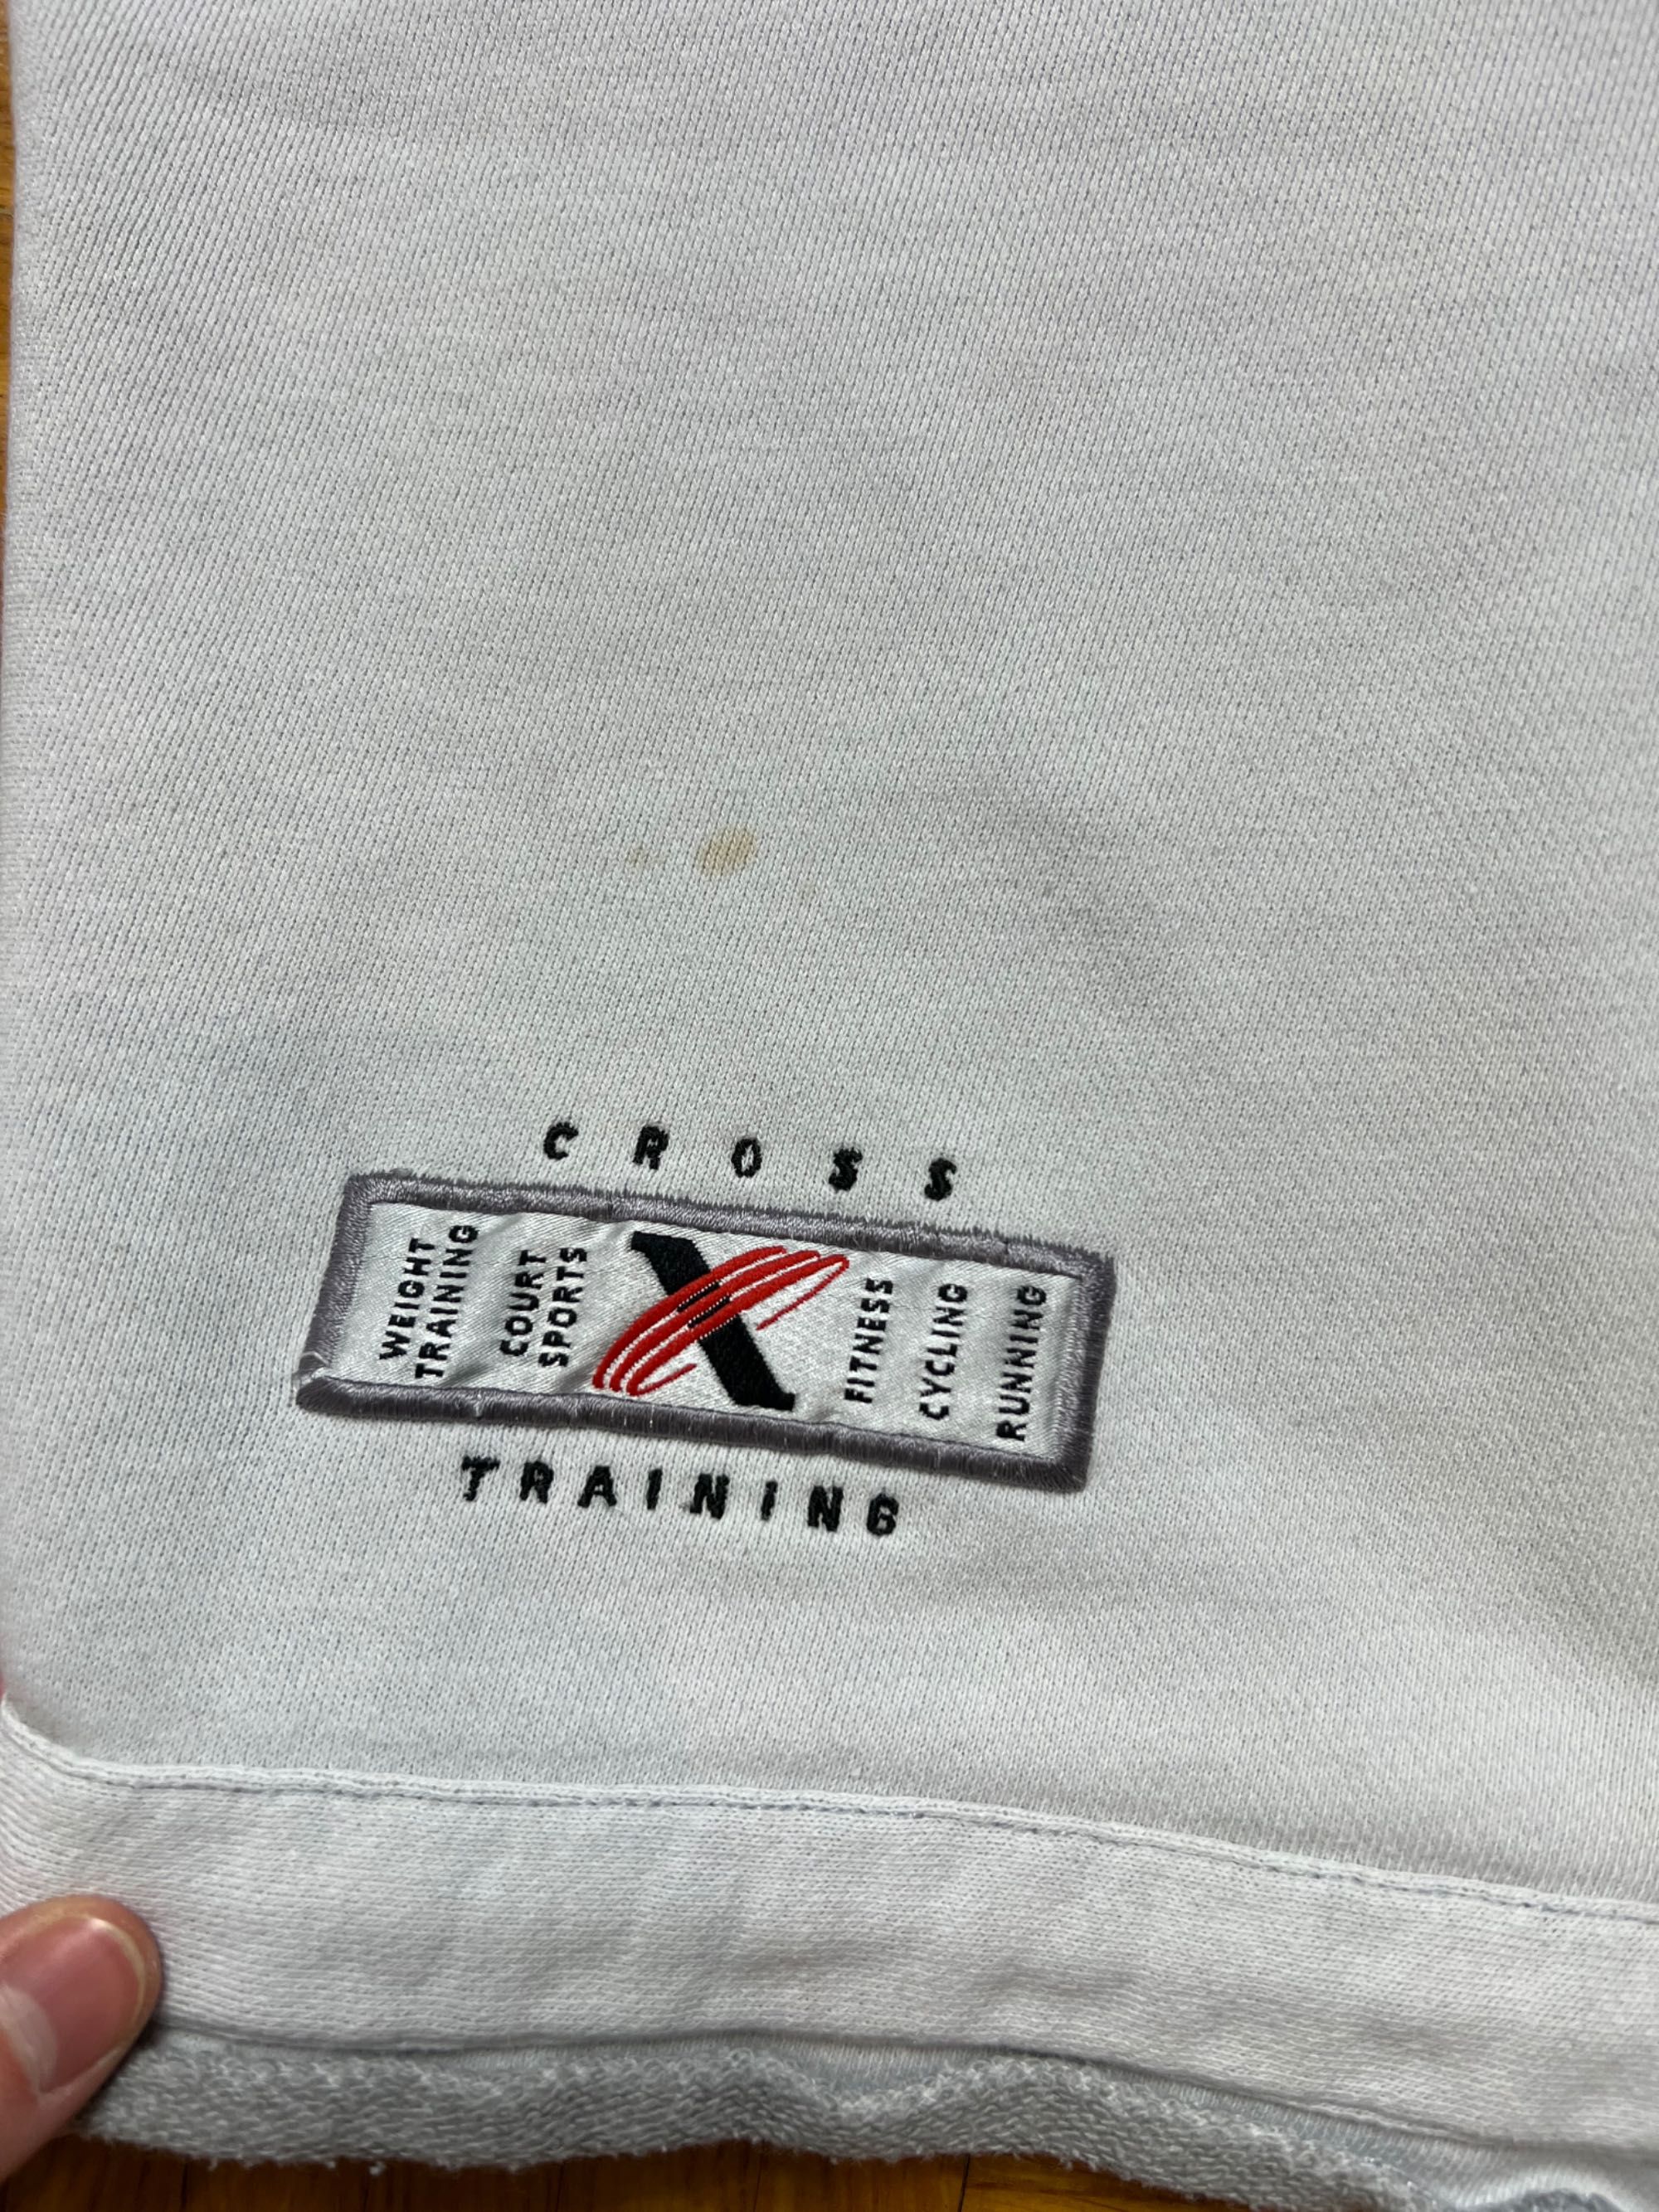 Bluza Nike Cross Training vintage 90’s boxy fit 61x61 cm